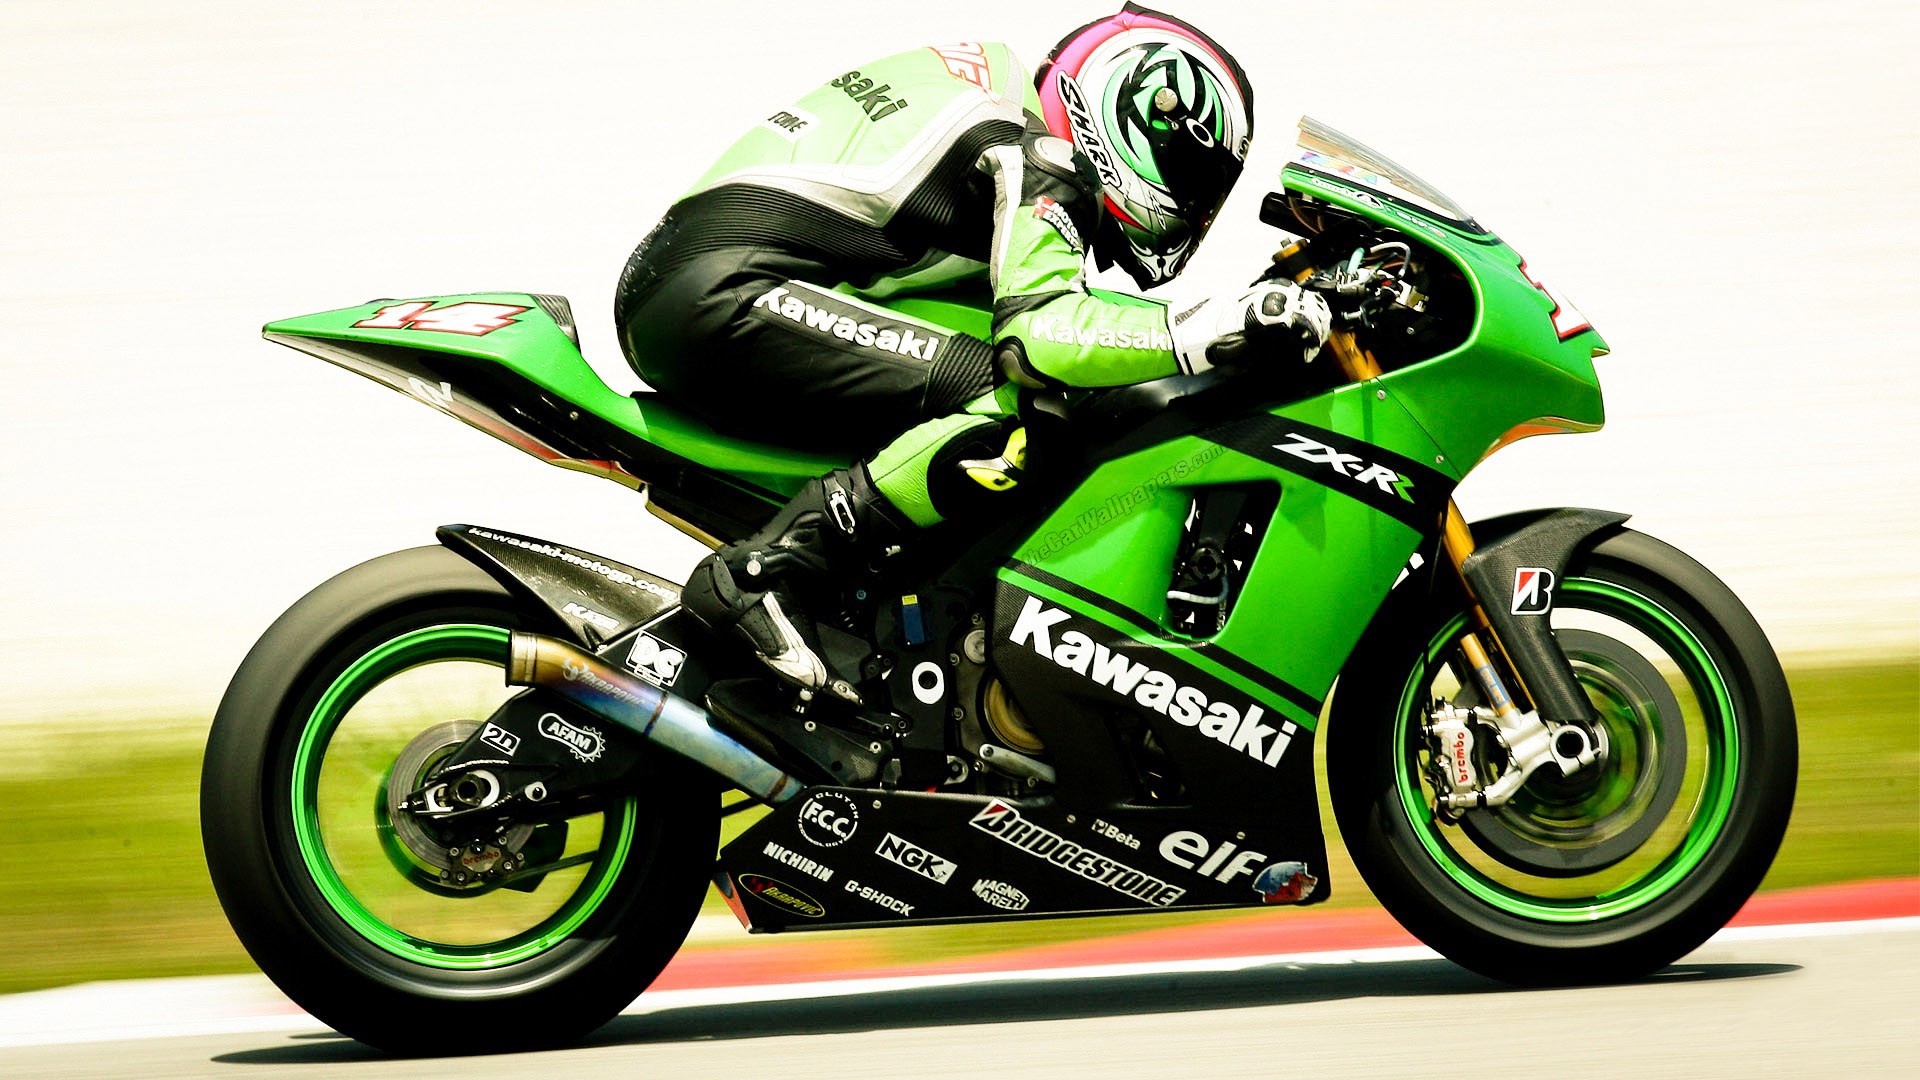 Kawasaki Racing MotoGP Wallpaper HD #9454 Wallpaper | High ...